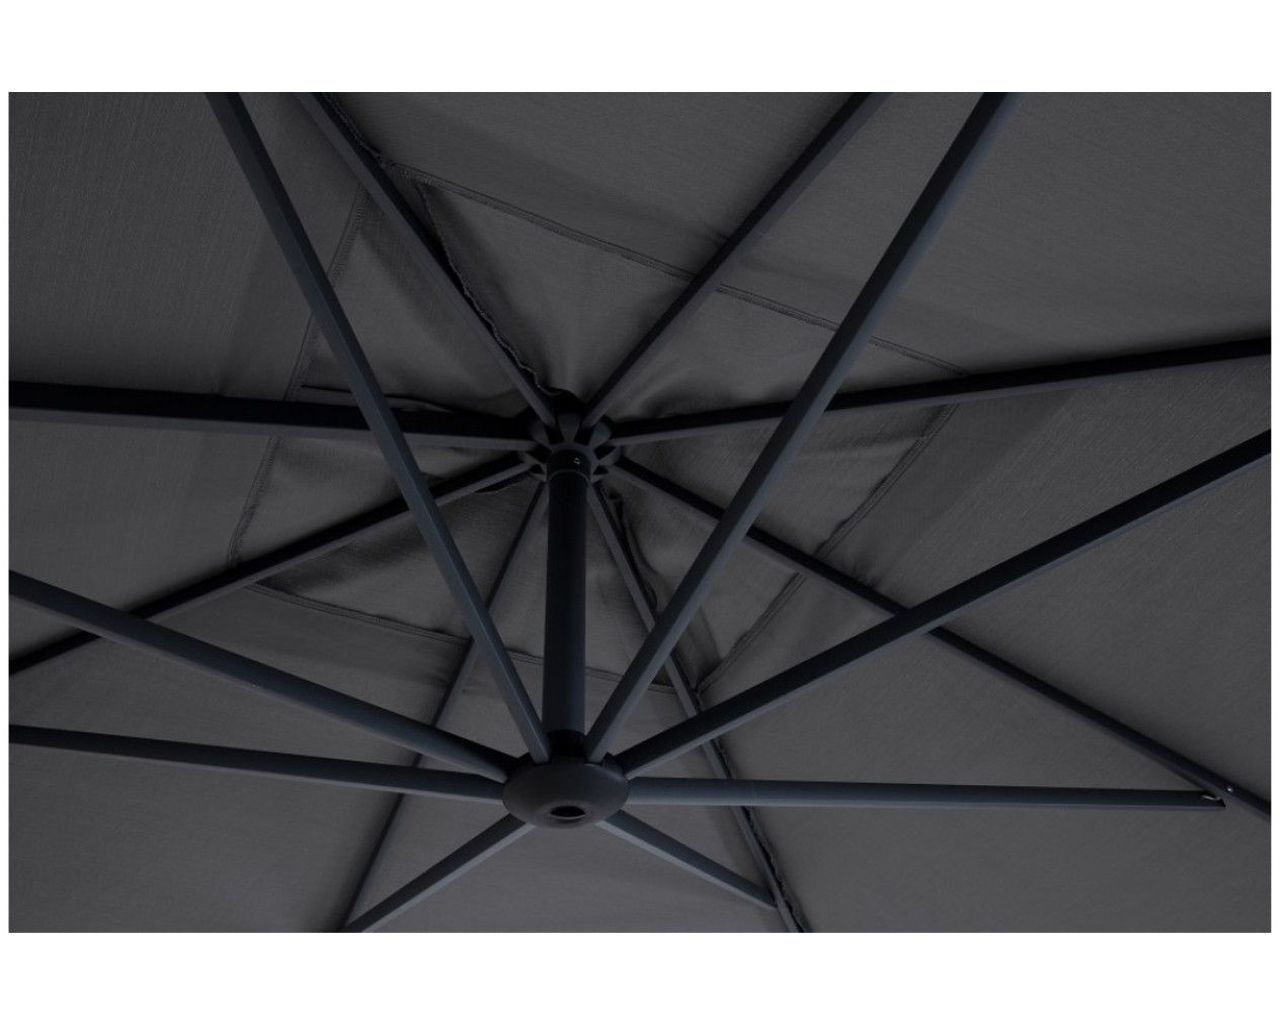 Naples 3x3m Square Cantilever Umbrella Charcoal, , hi-res image number null